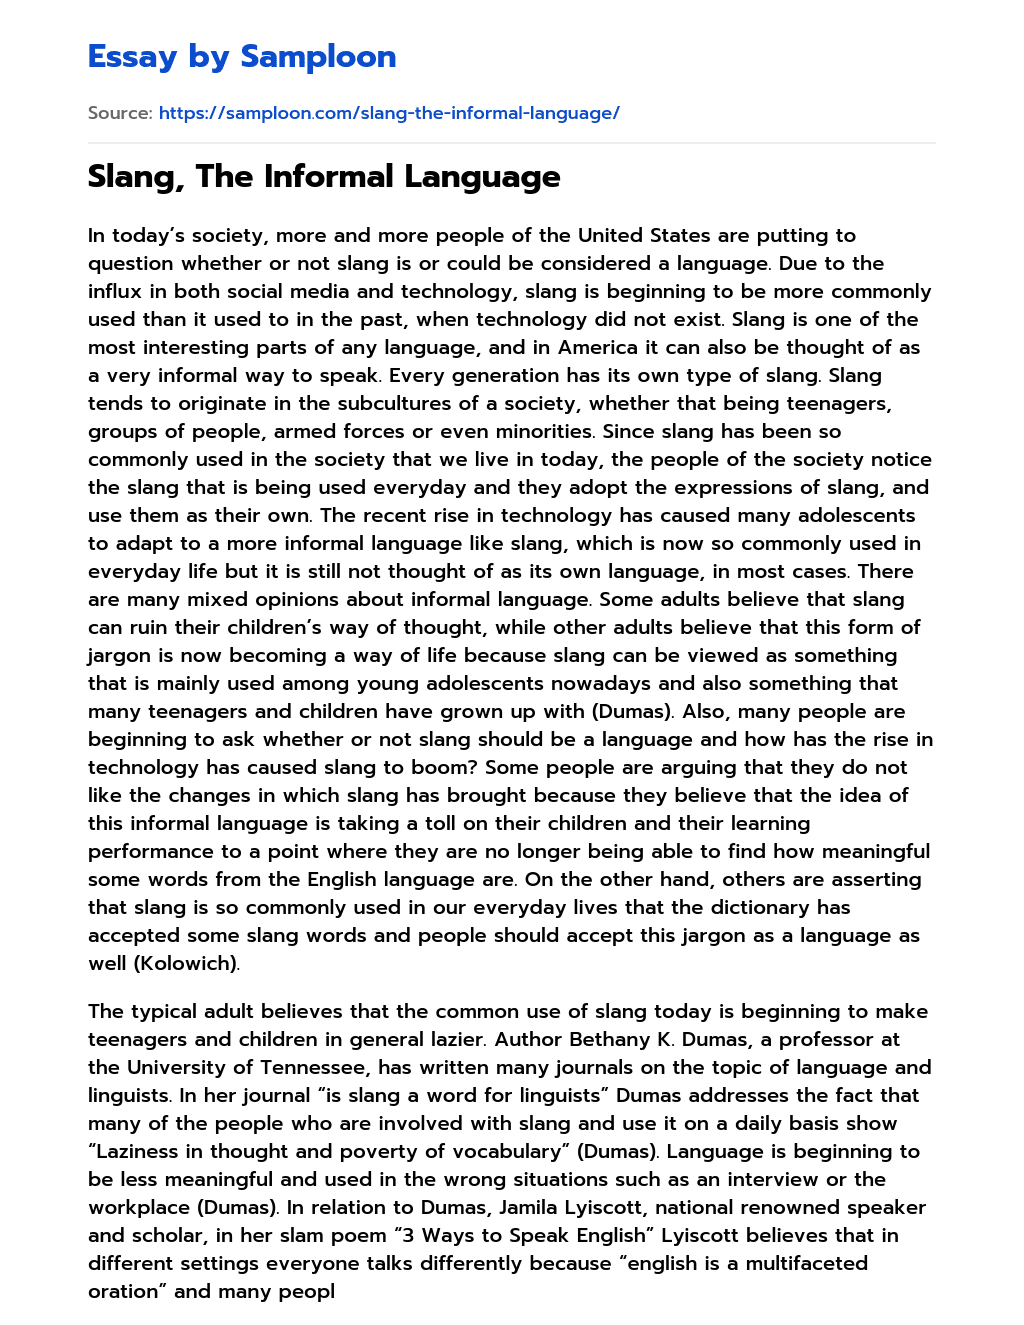 Slang, The Informal Language  essay